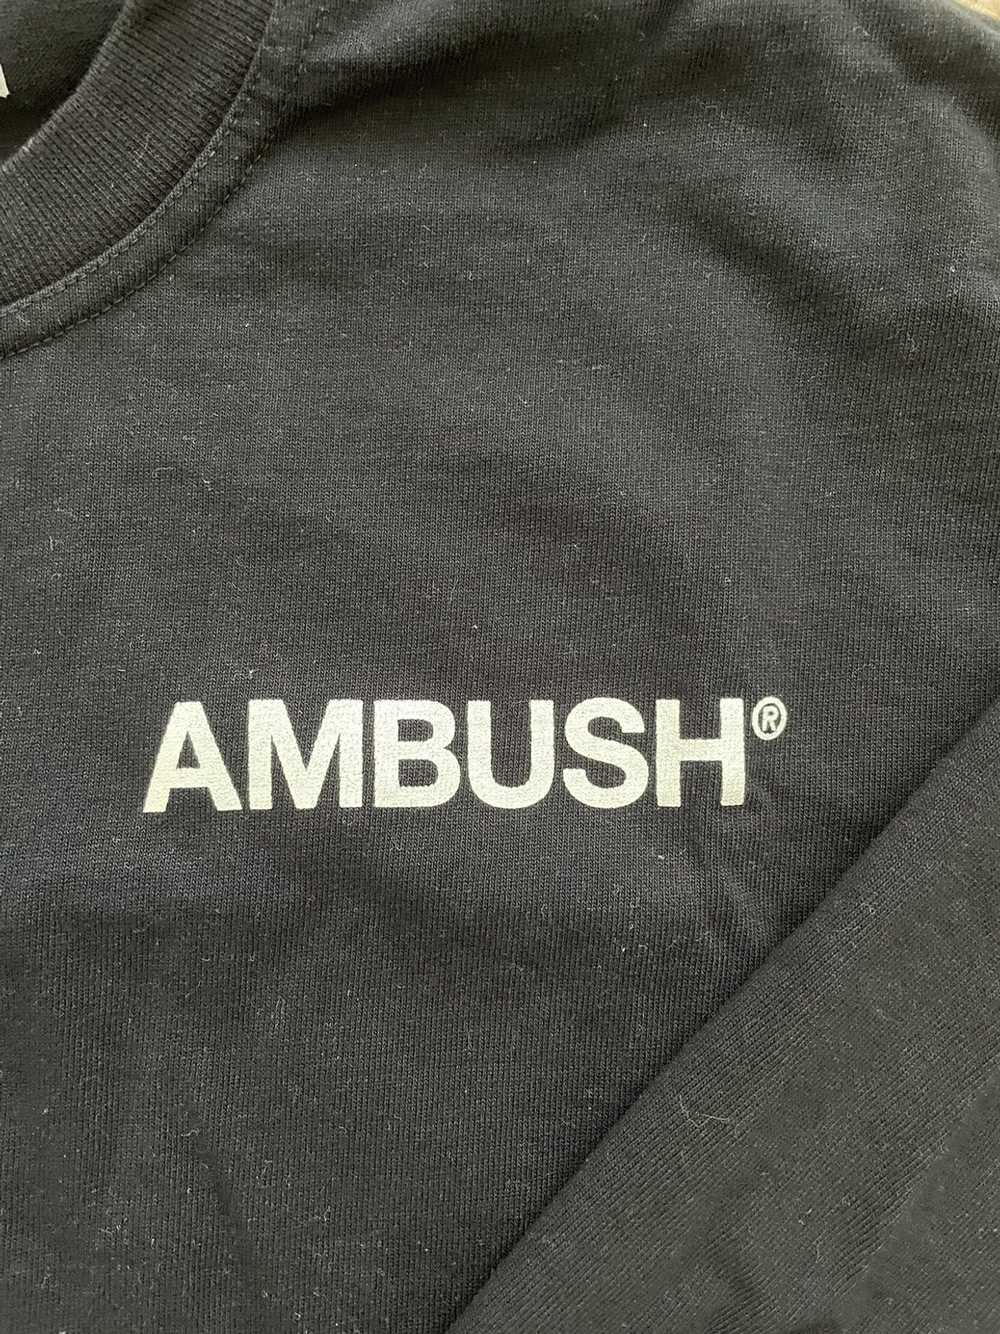 Ambush Design Ambush Amazon Long sleeve tee - image 3